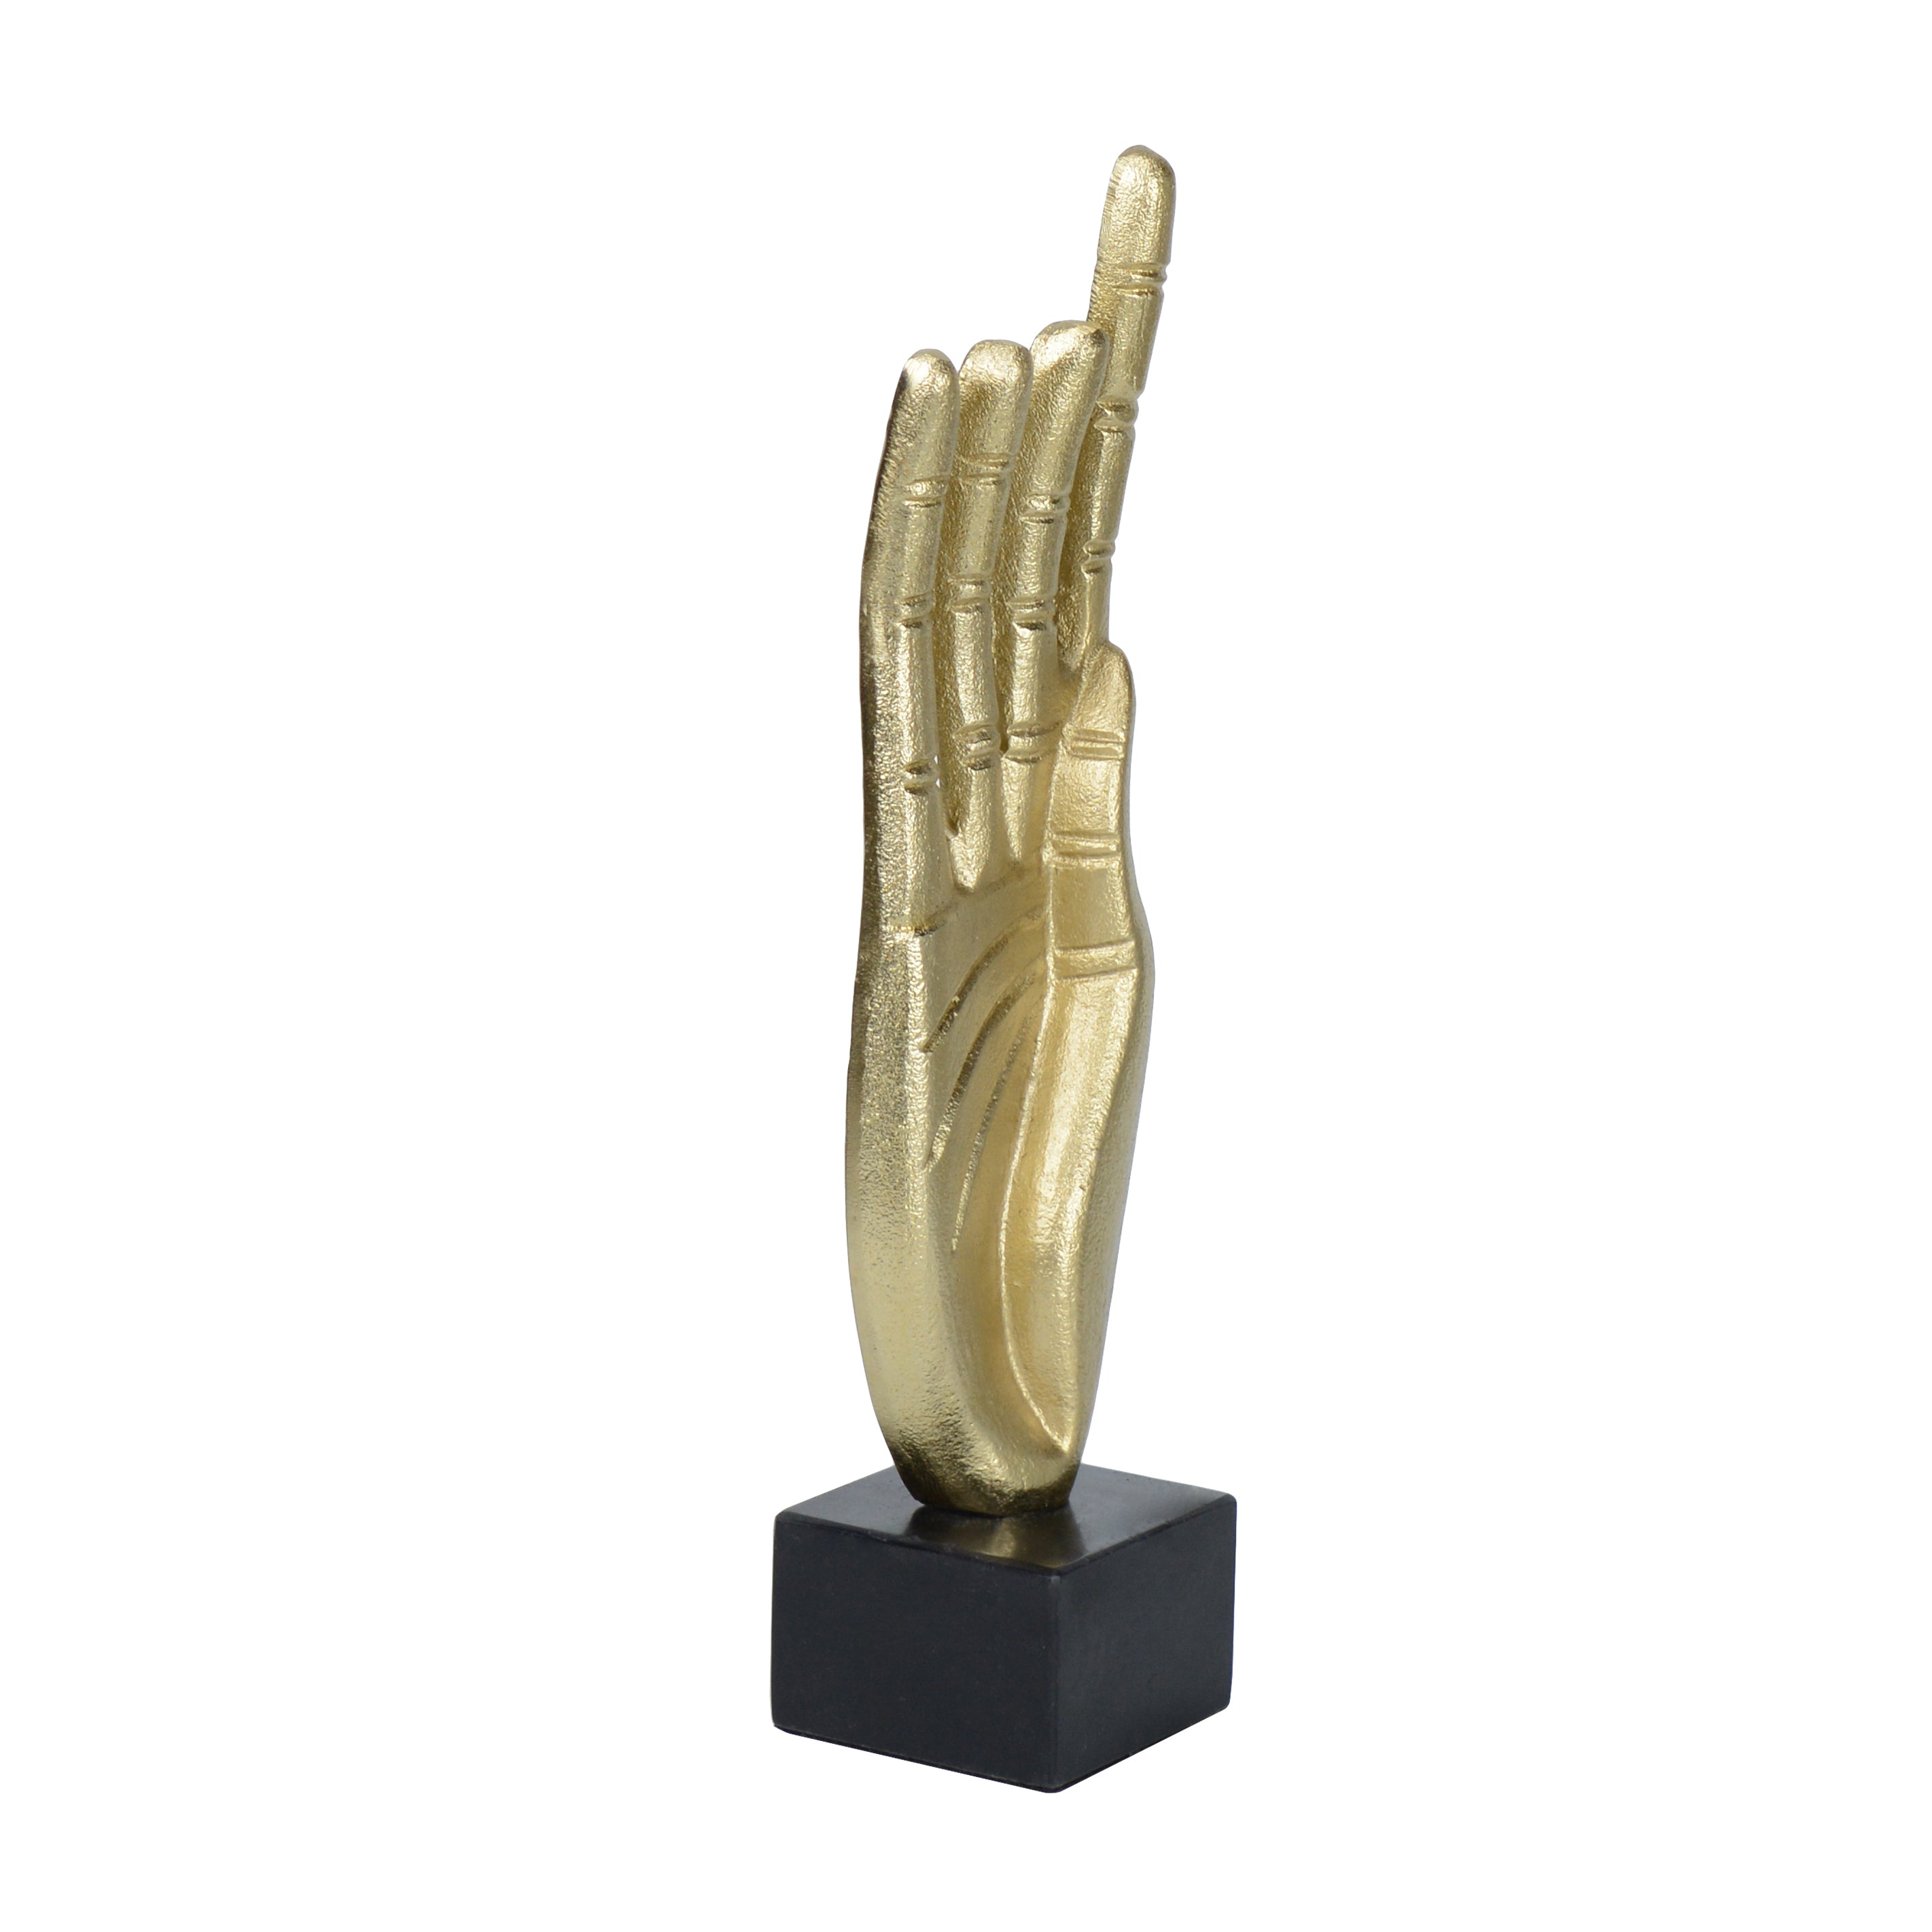 Palma Gold Hand Decor Sculpture